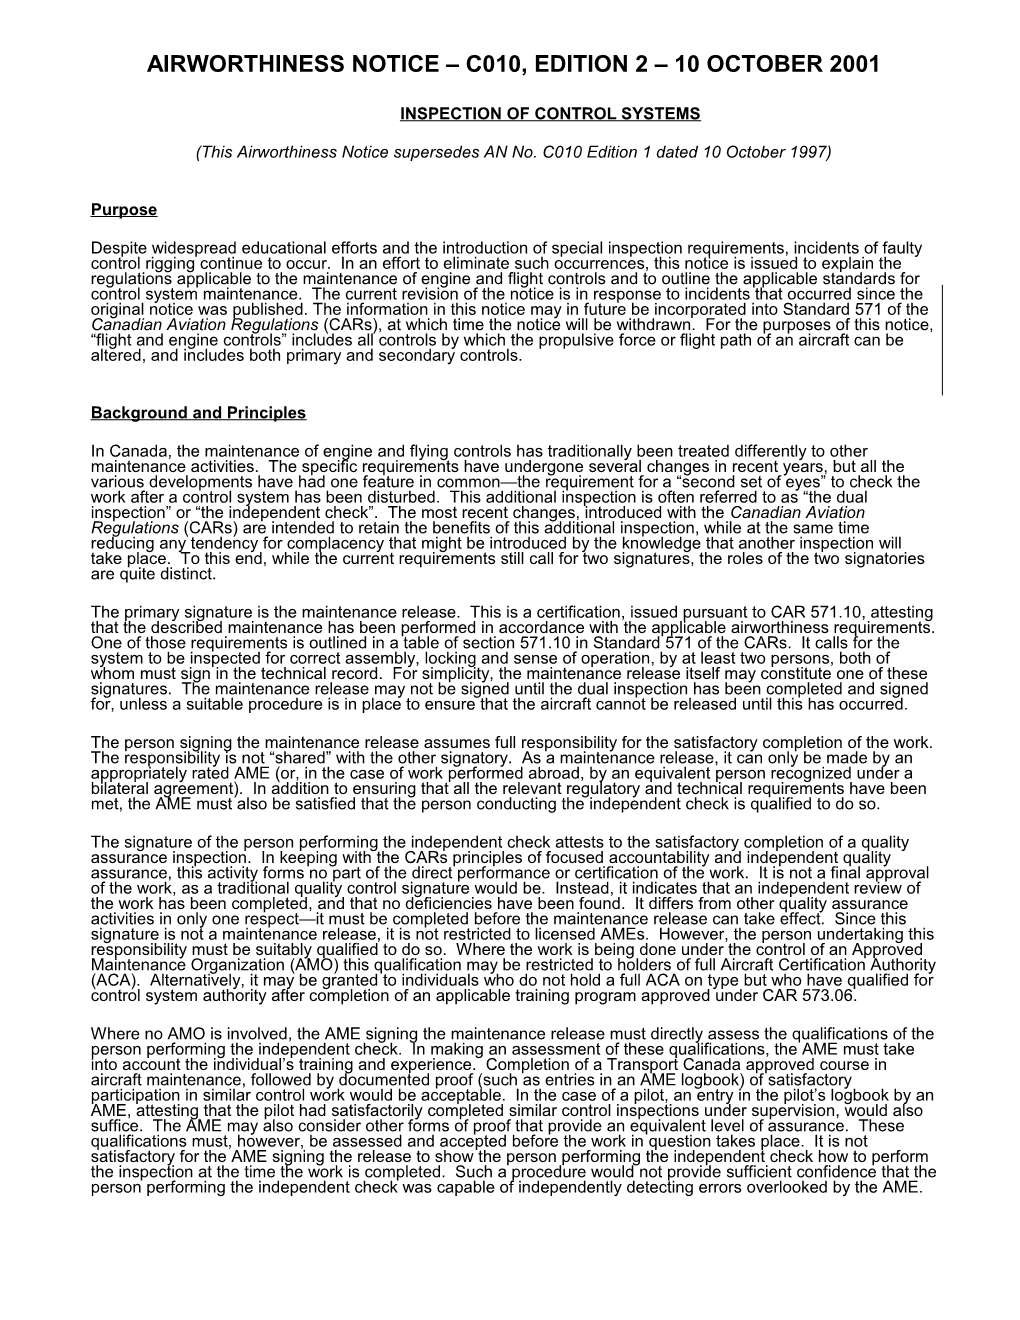 Airworthiness Notice C010, Edition 2 10 October 2001